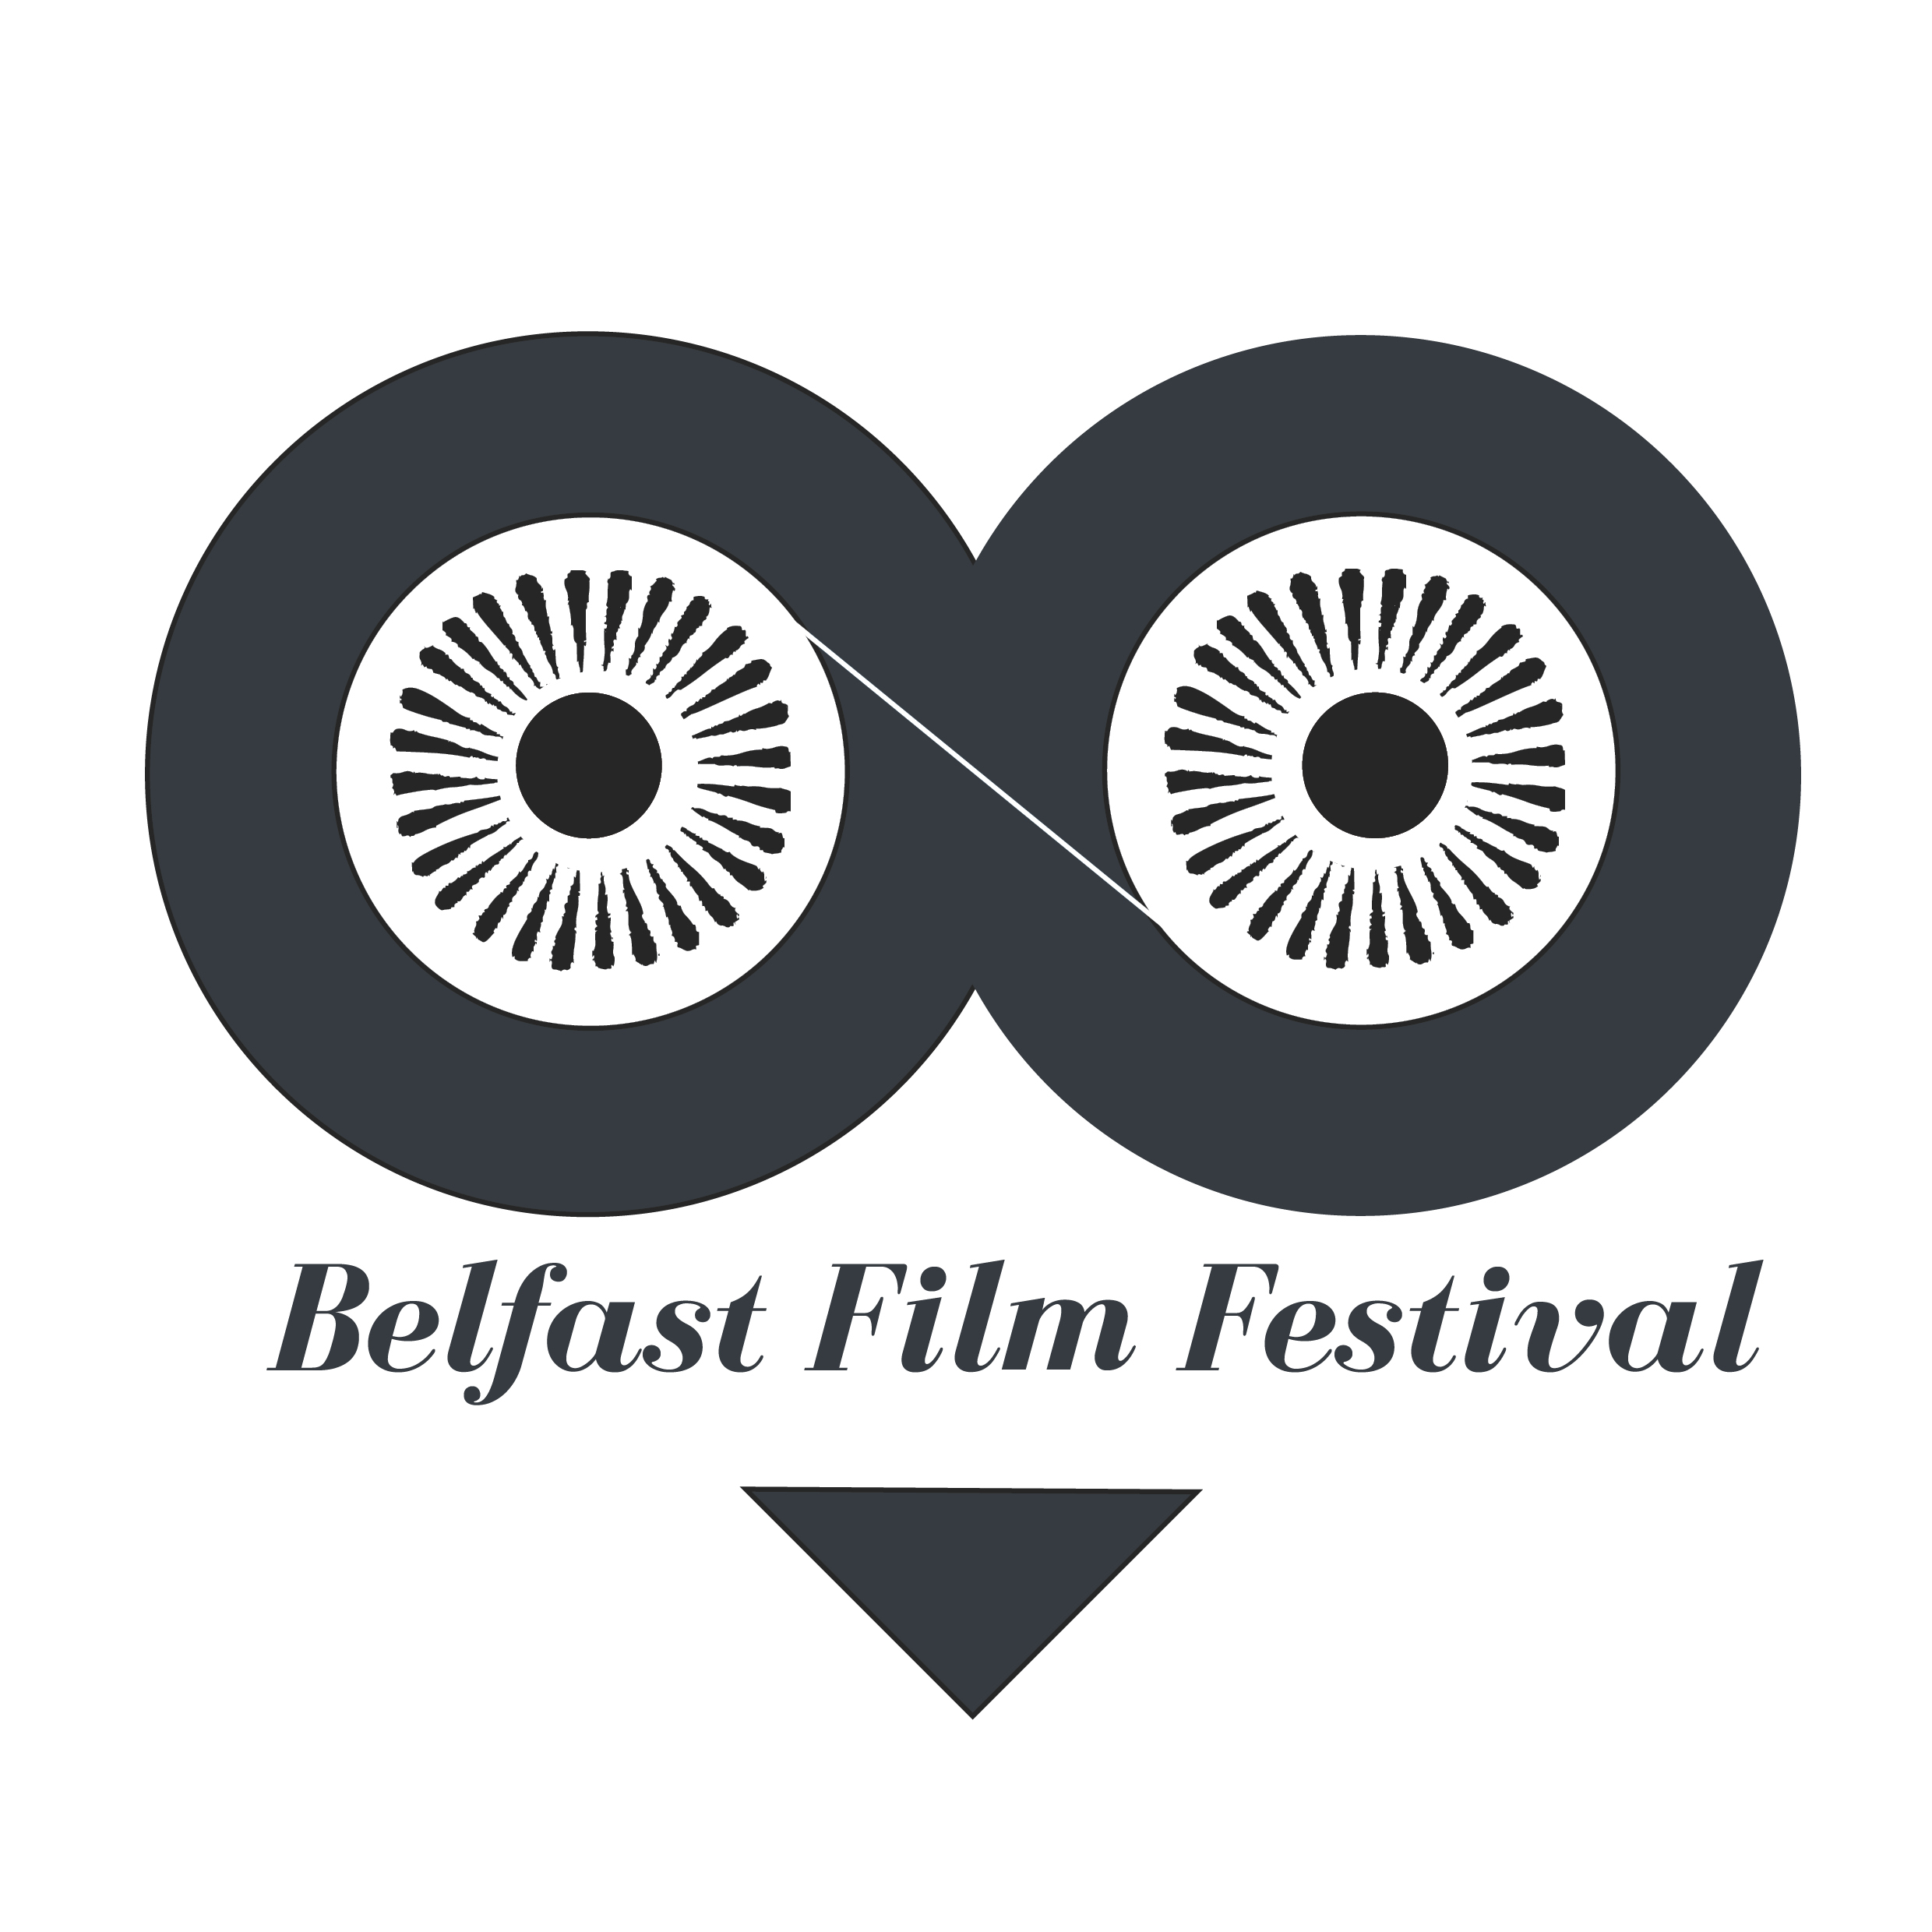 Presented by Belfast Film Festival